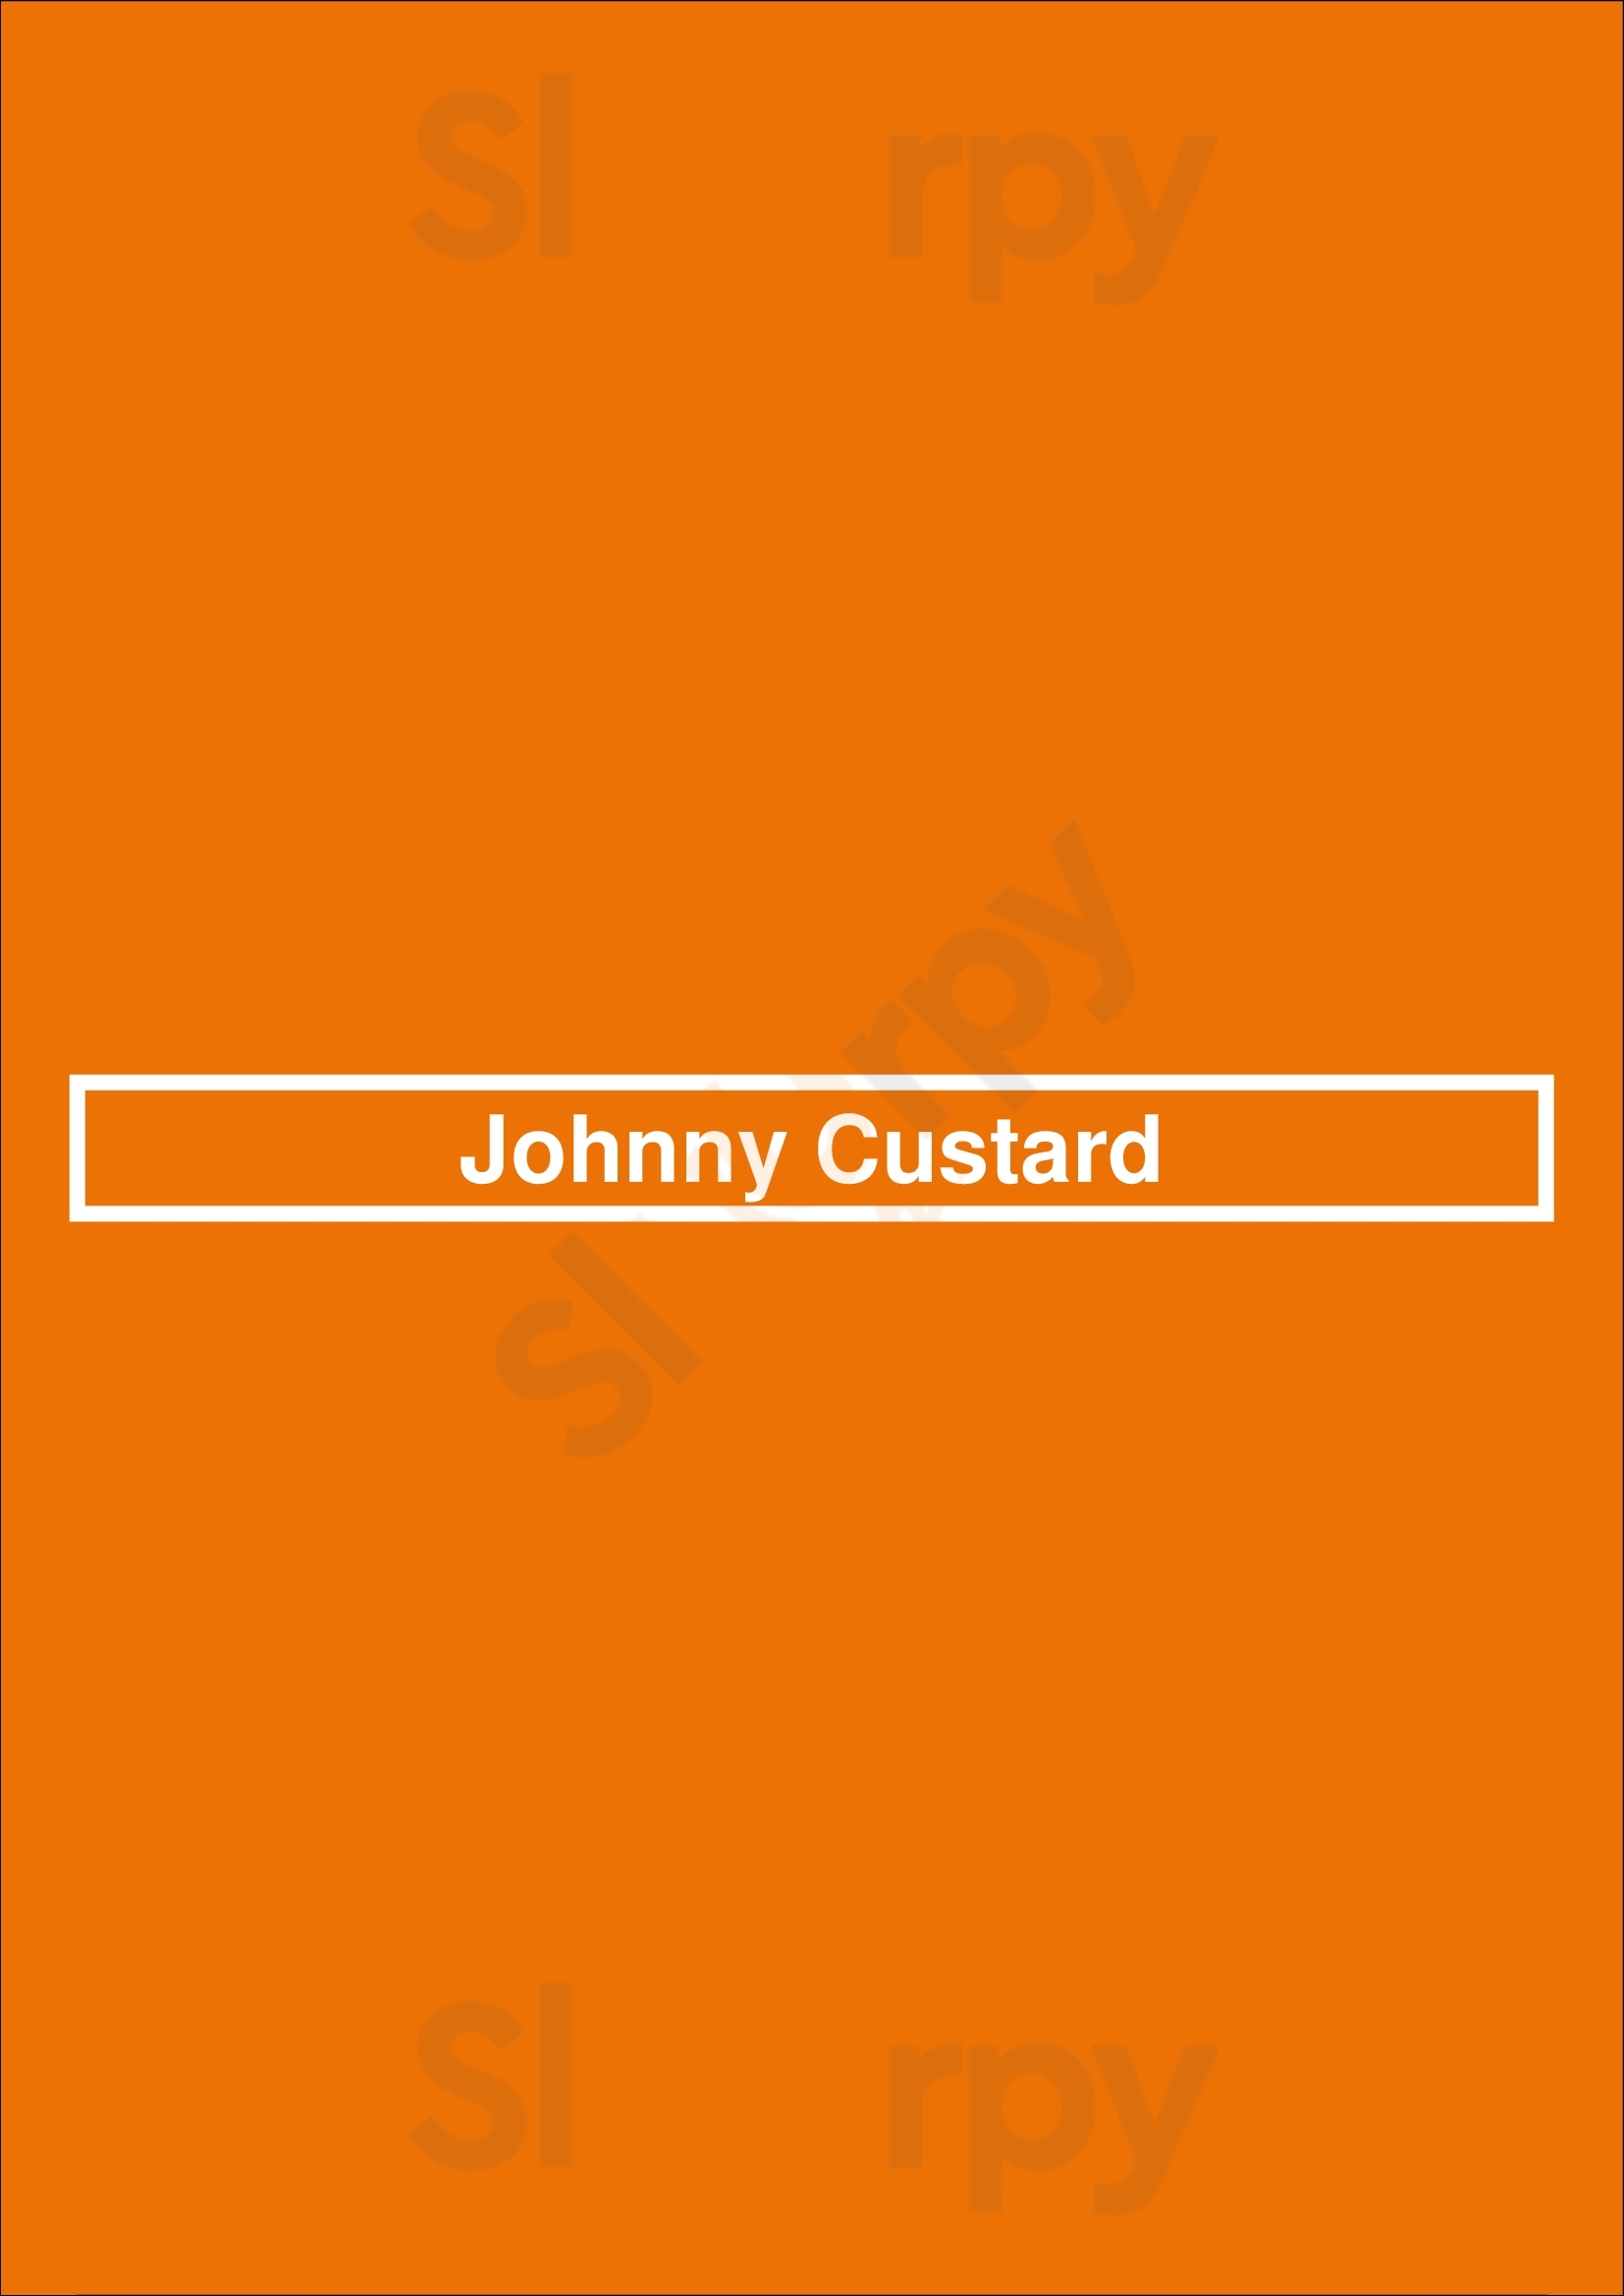 Johnny Custard Leicester Menu - 1